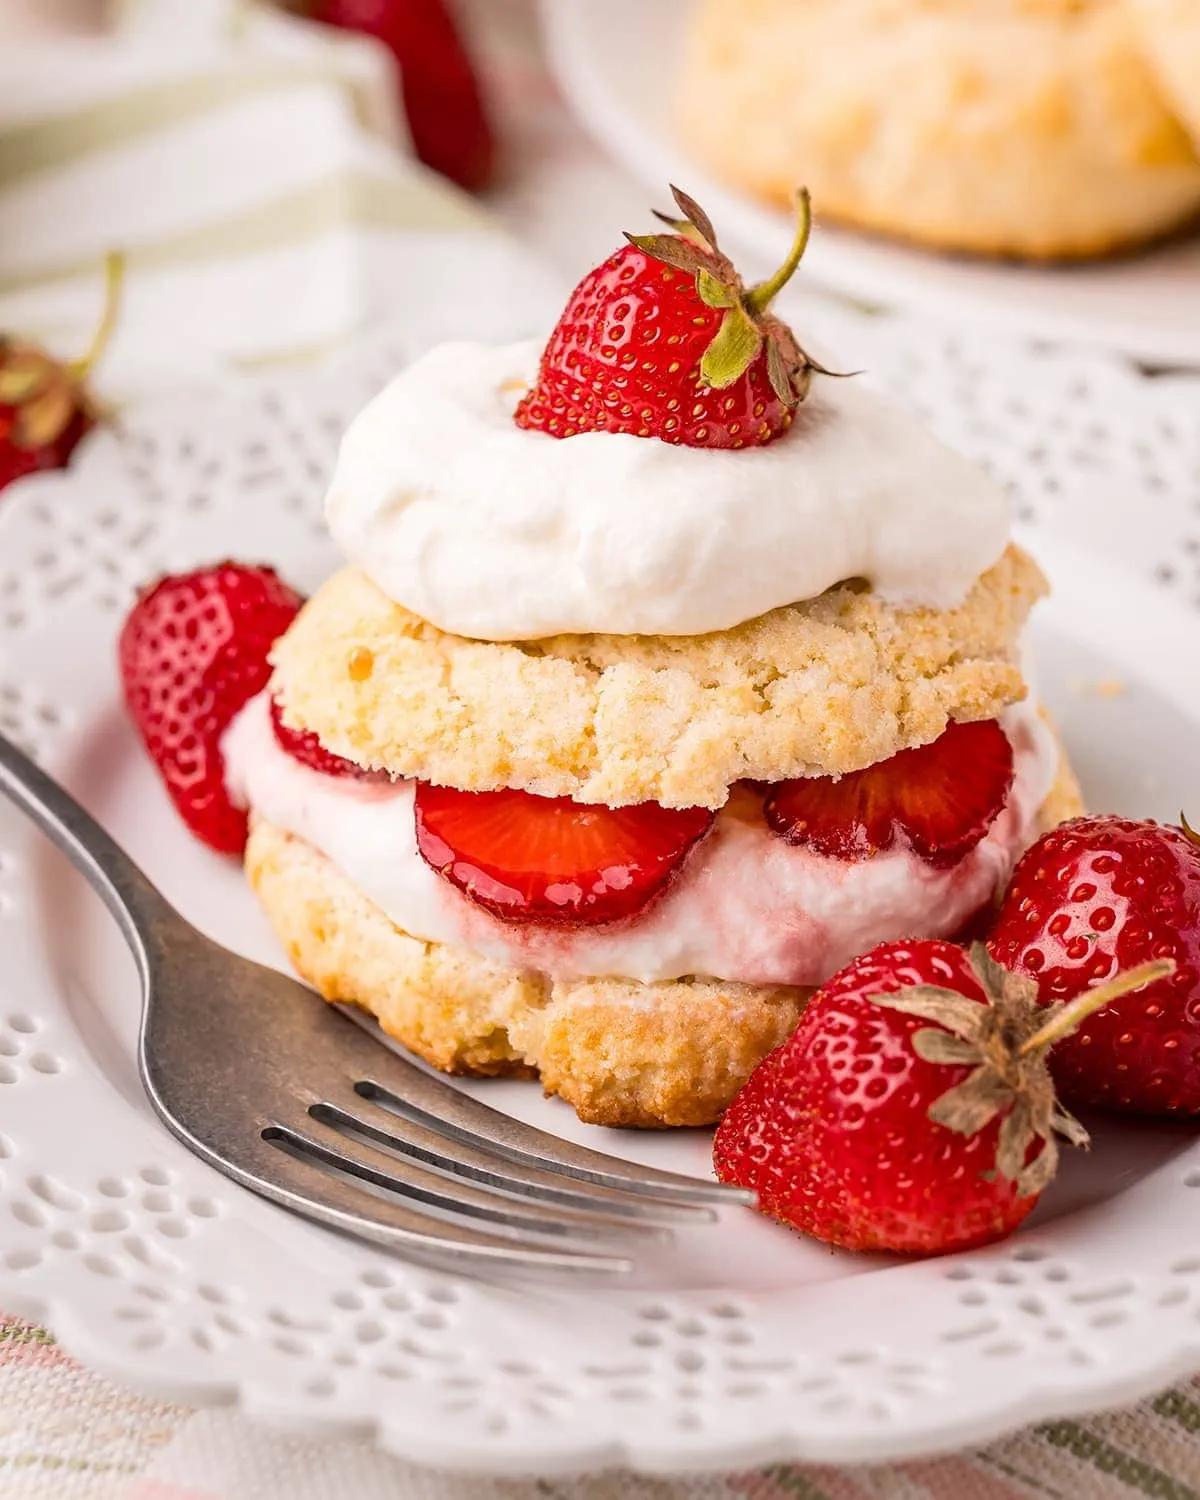 Strawberry Shortcake – Like Mother, Like Daughter